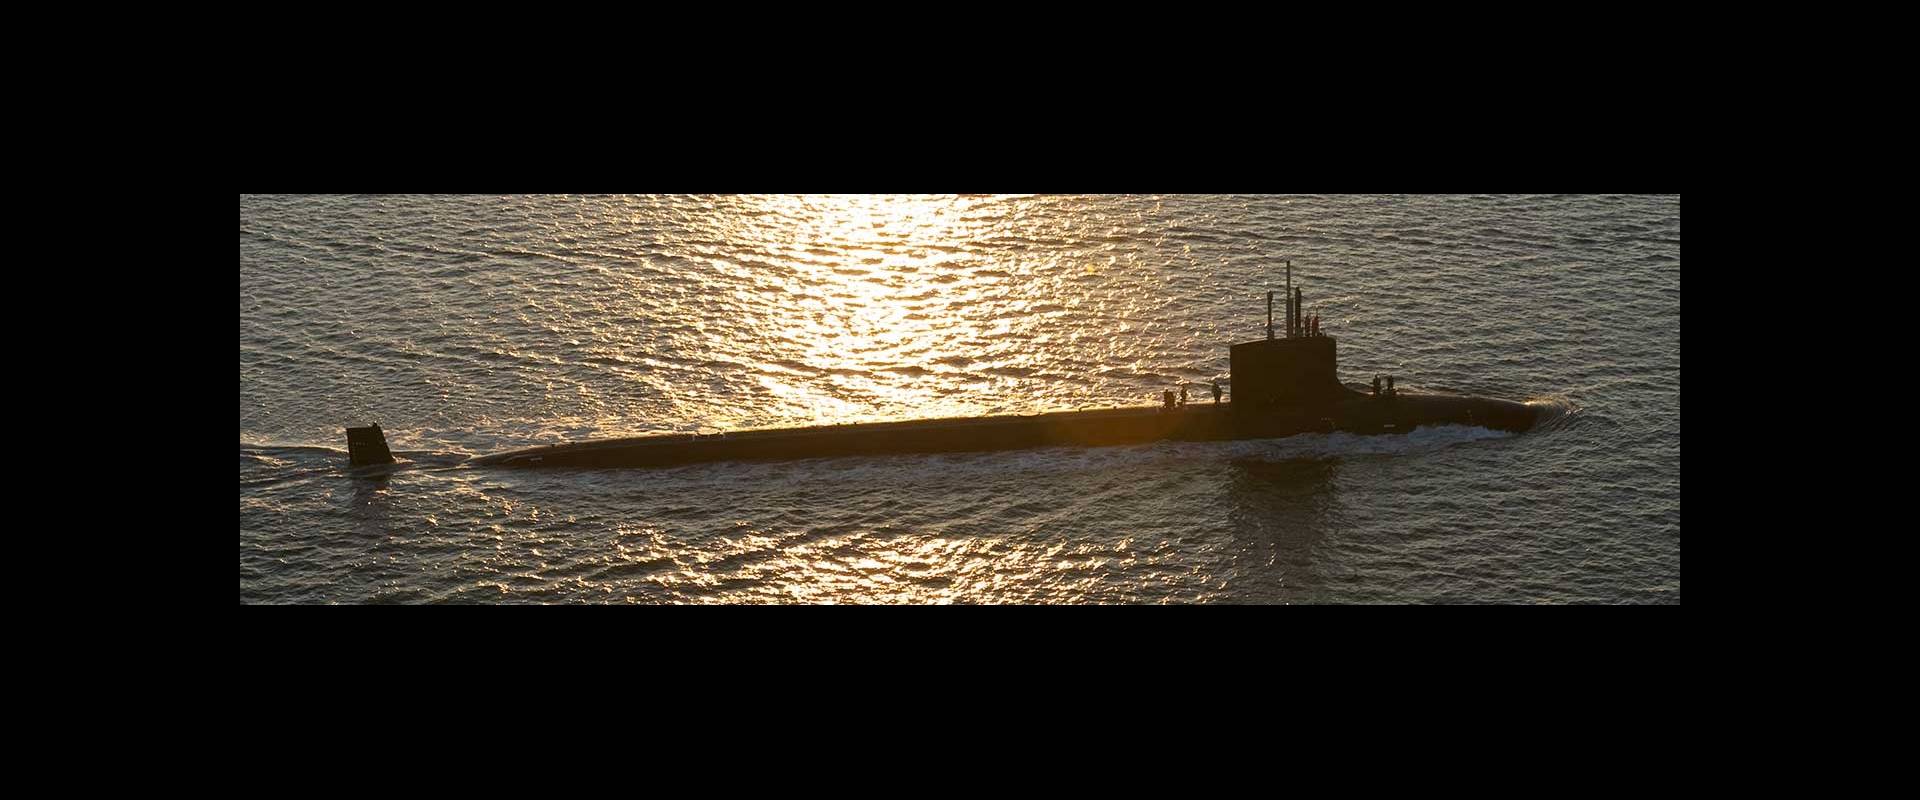 Virginia-class submarine at sea 